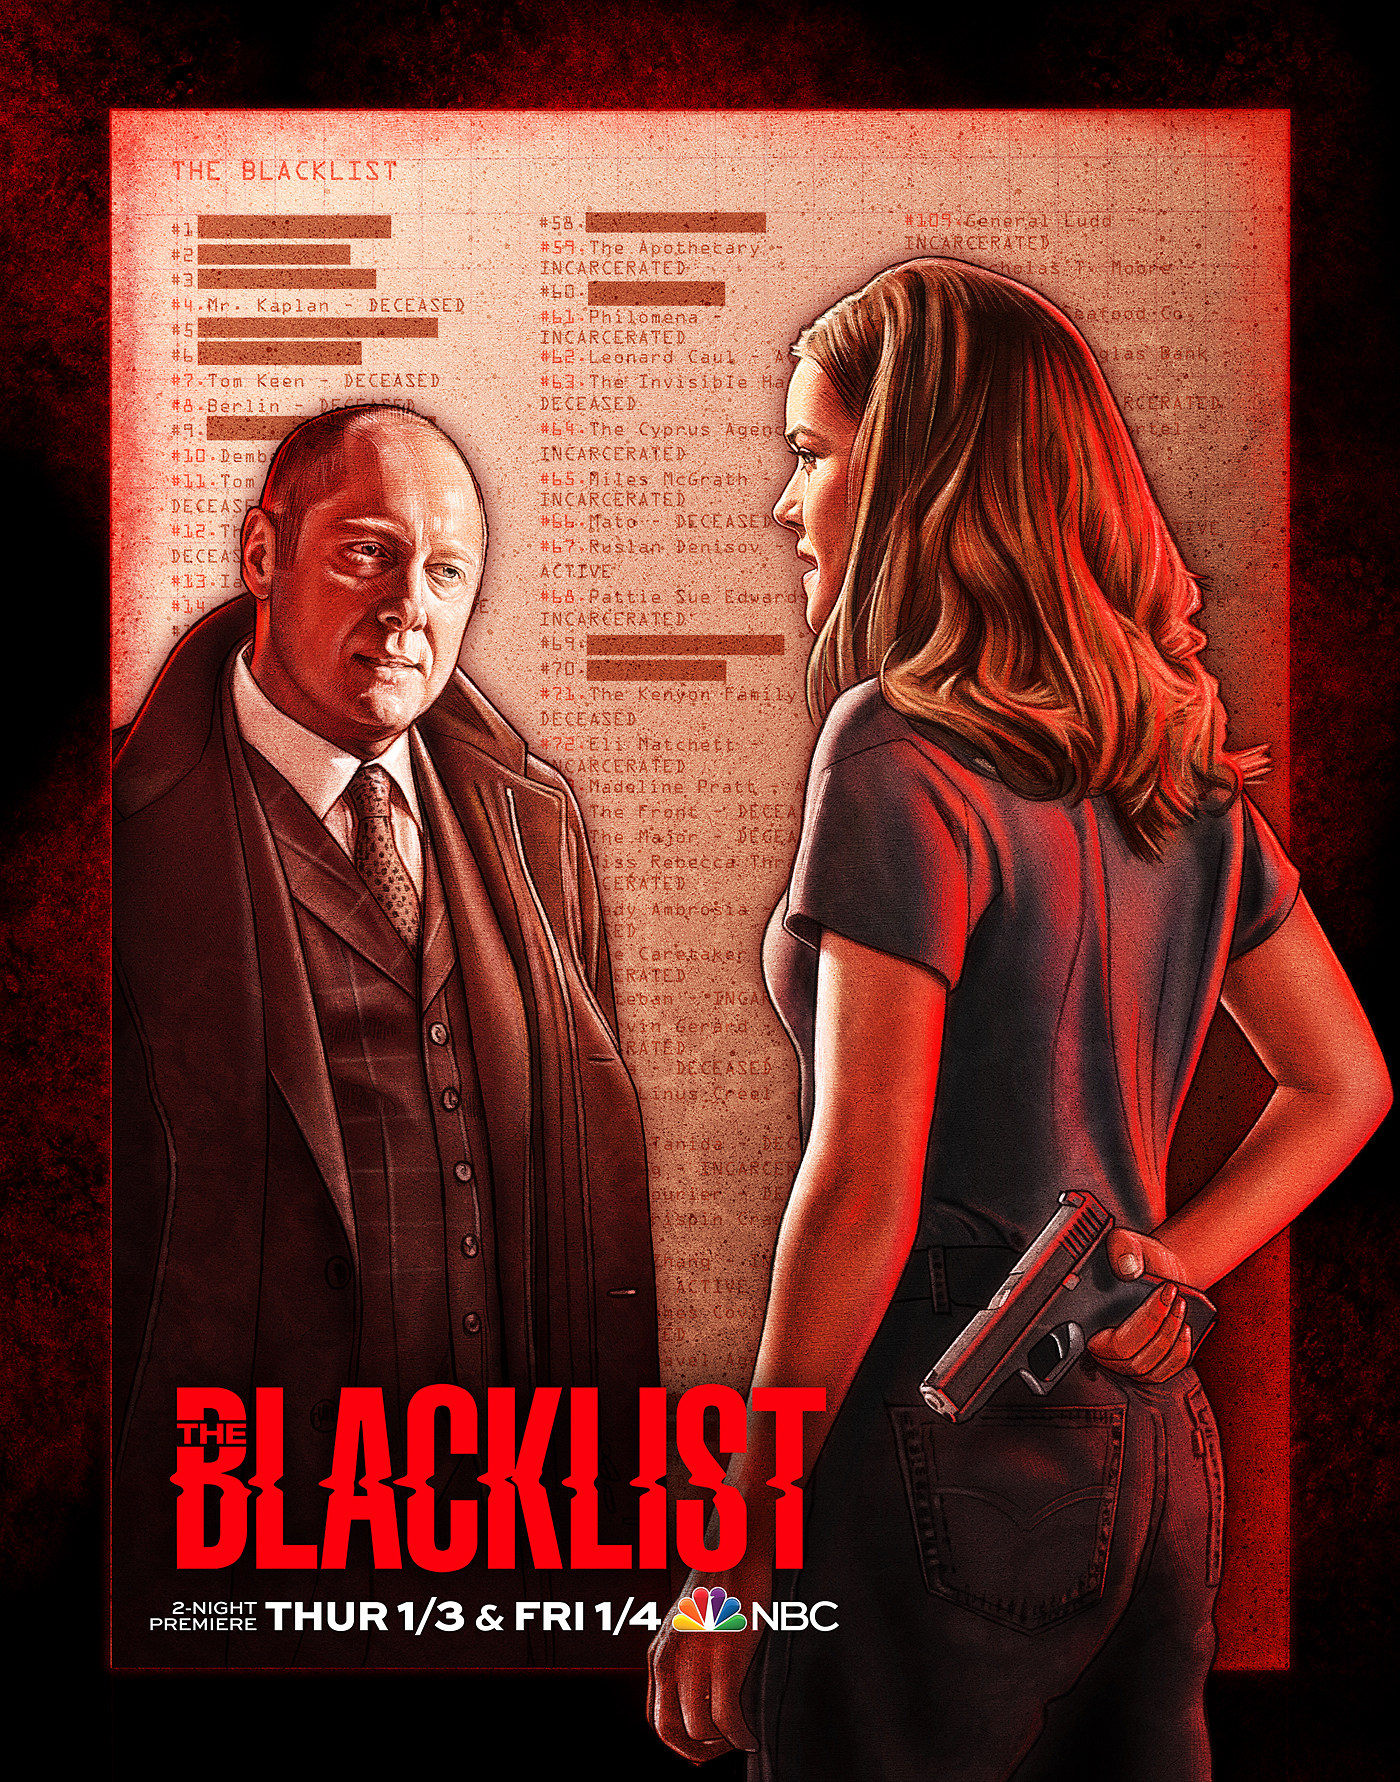 The Blacklist Season 6 Poster - Elizabeth and Reddington by Kyle Lambert